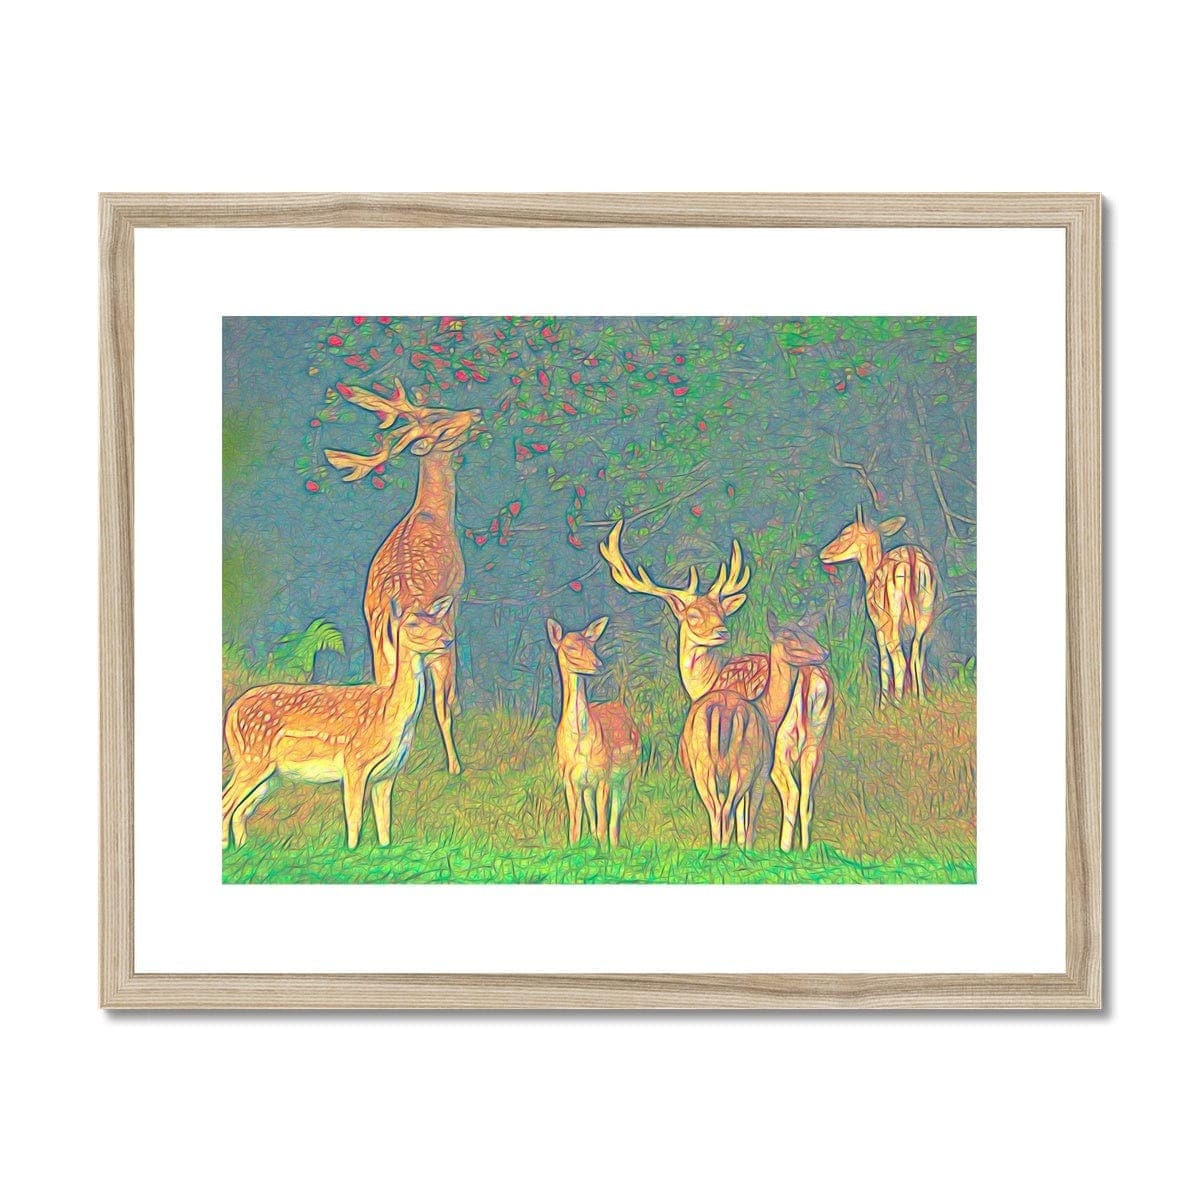 Deer pack in the forest, Framed & Mounted Print, by Ingrid Hütten